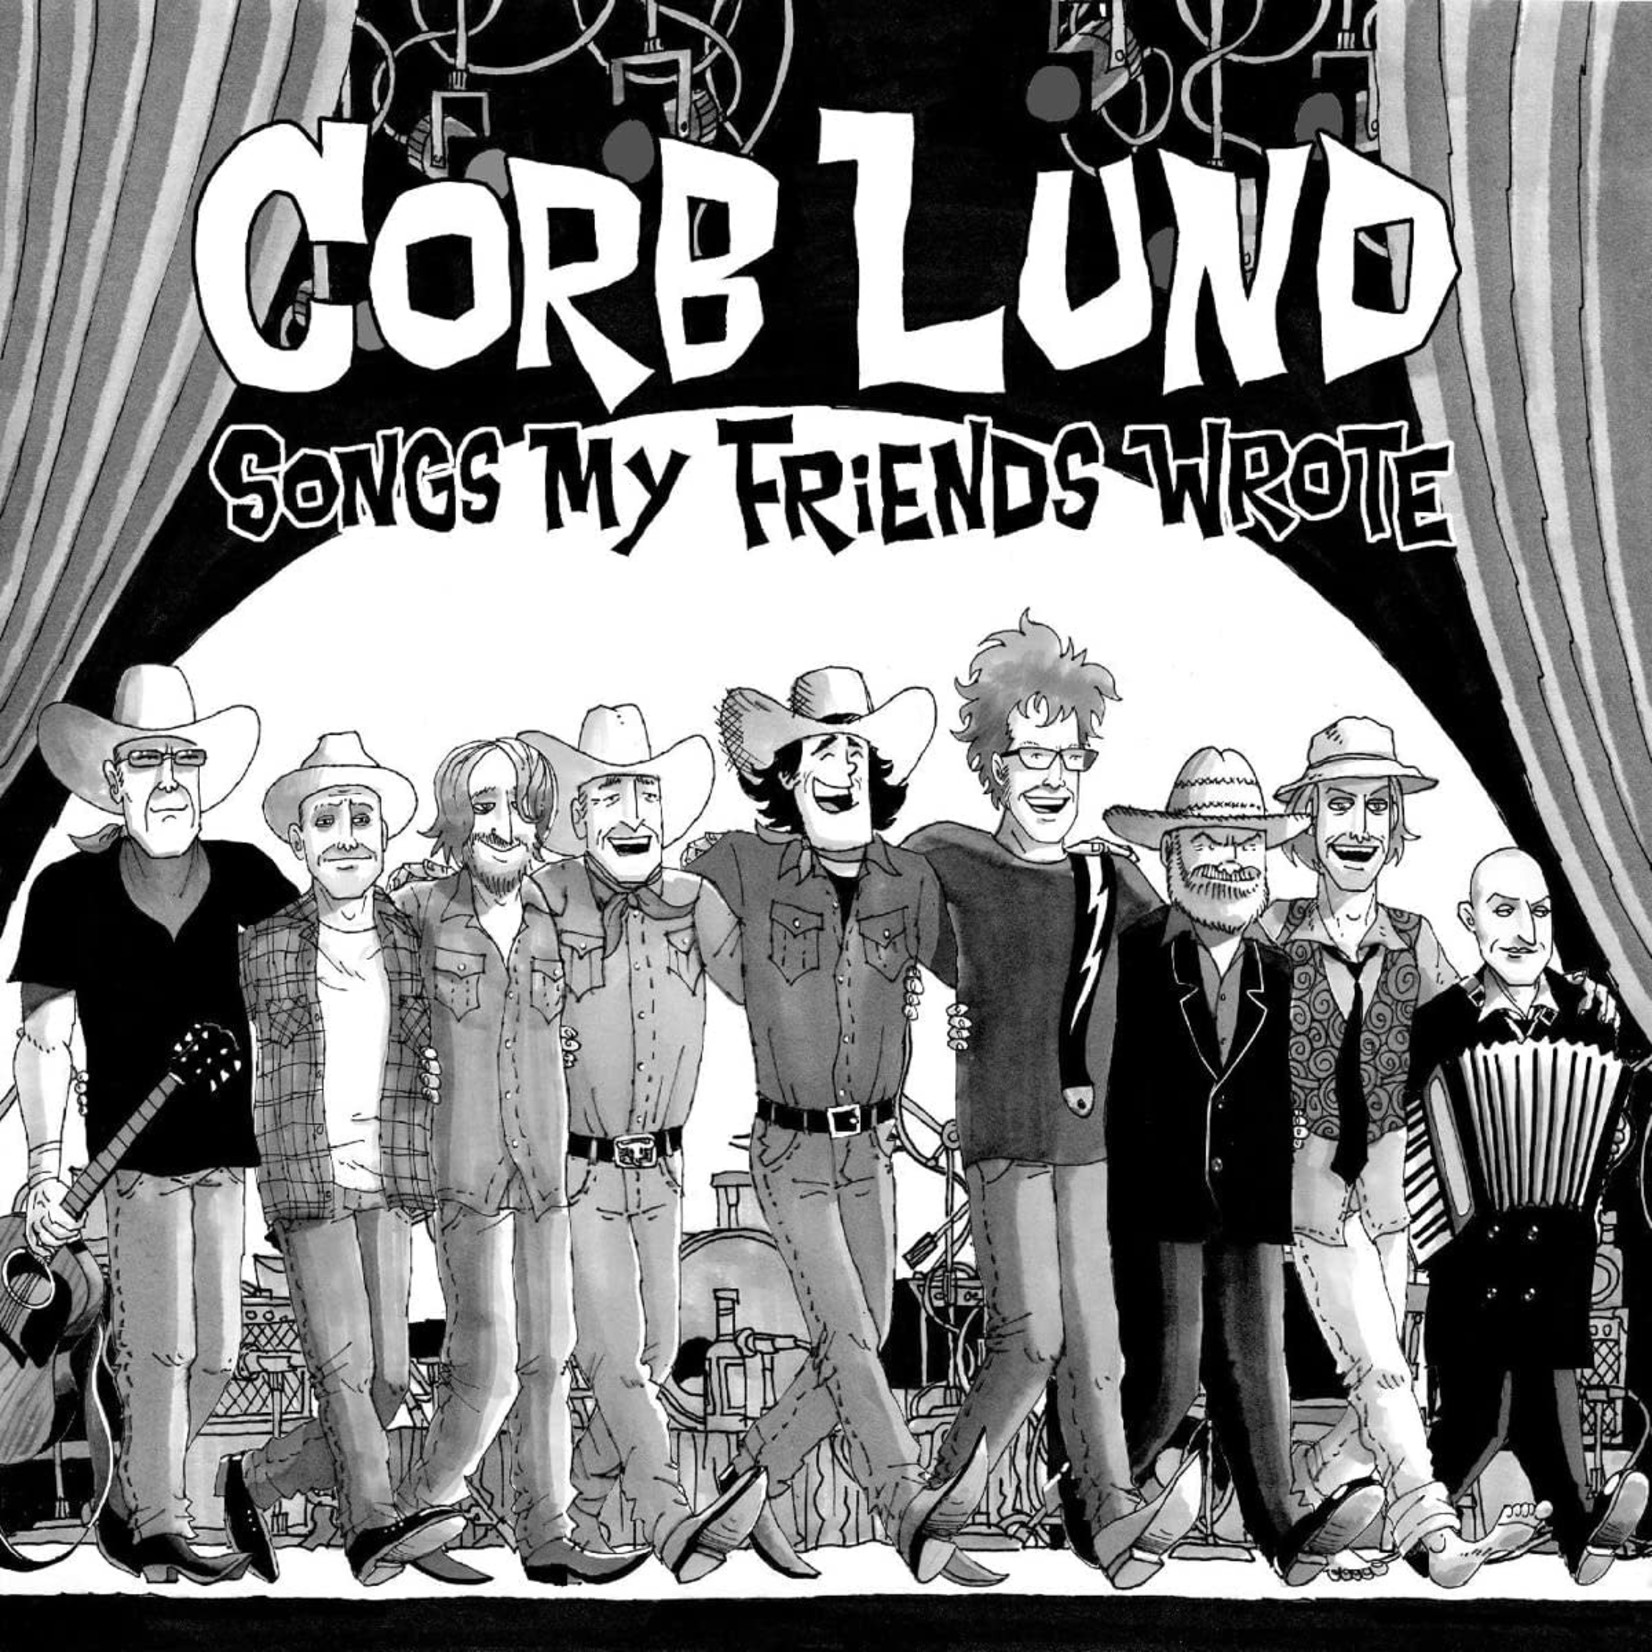 Vinyl Cord Lund - Songs My Friends Wrote